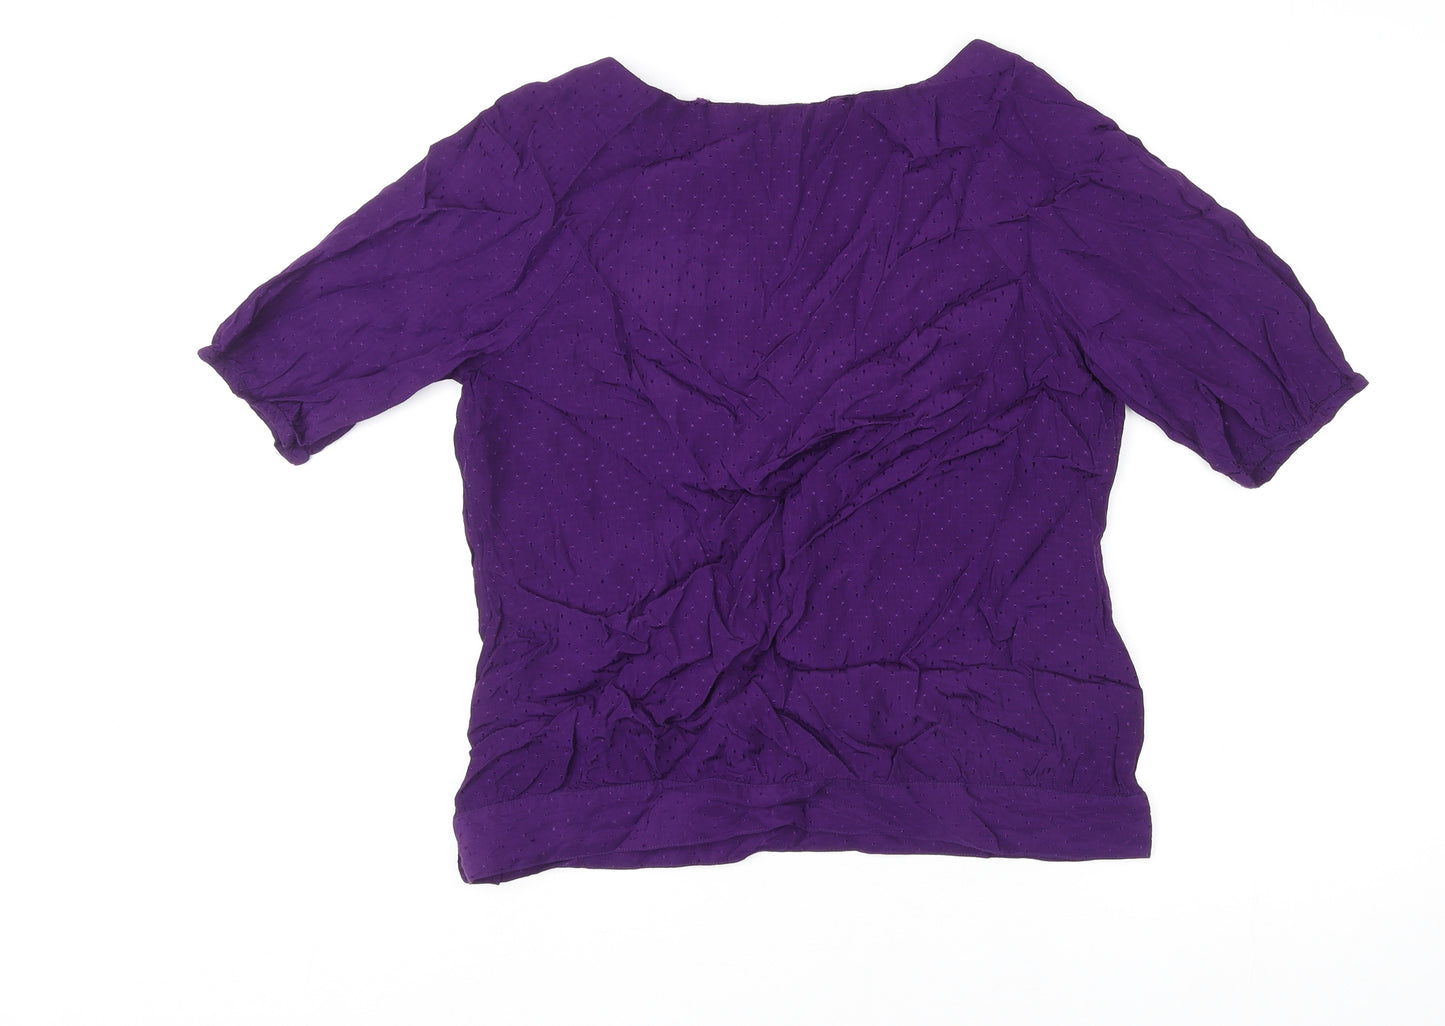 Monsoon Womens Purple Viscose Basic Blouse Size 14 Scoop Neck